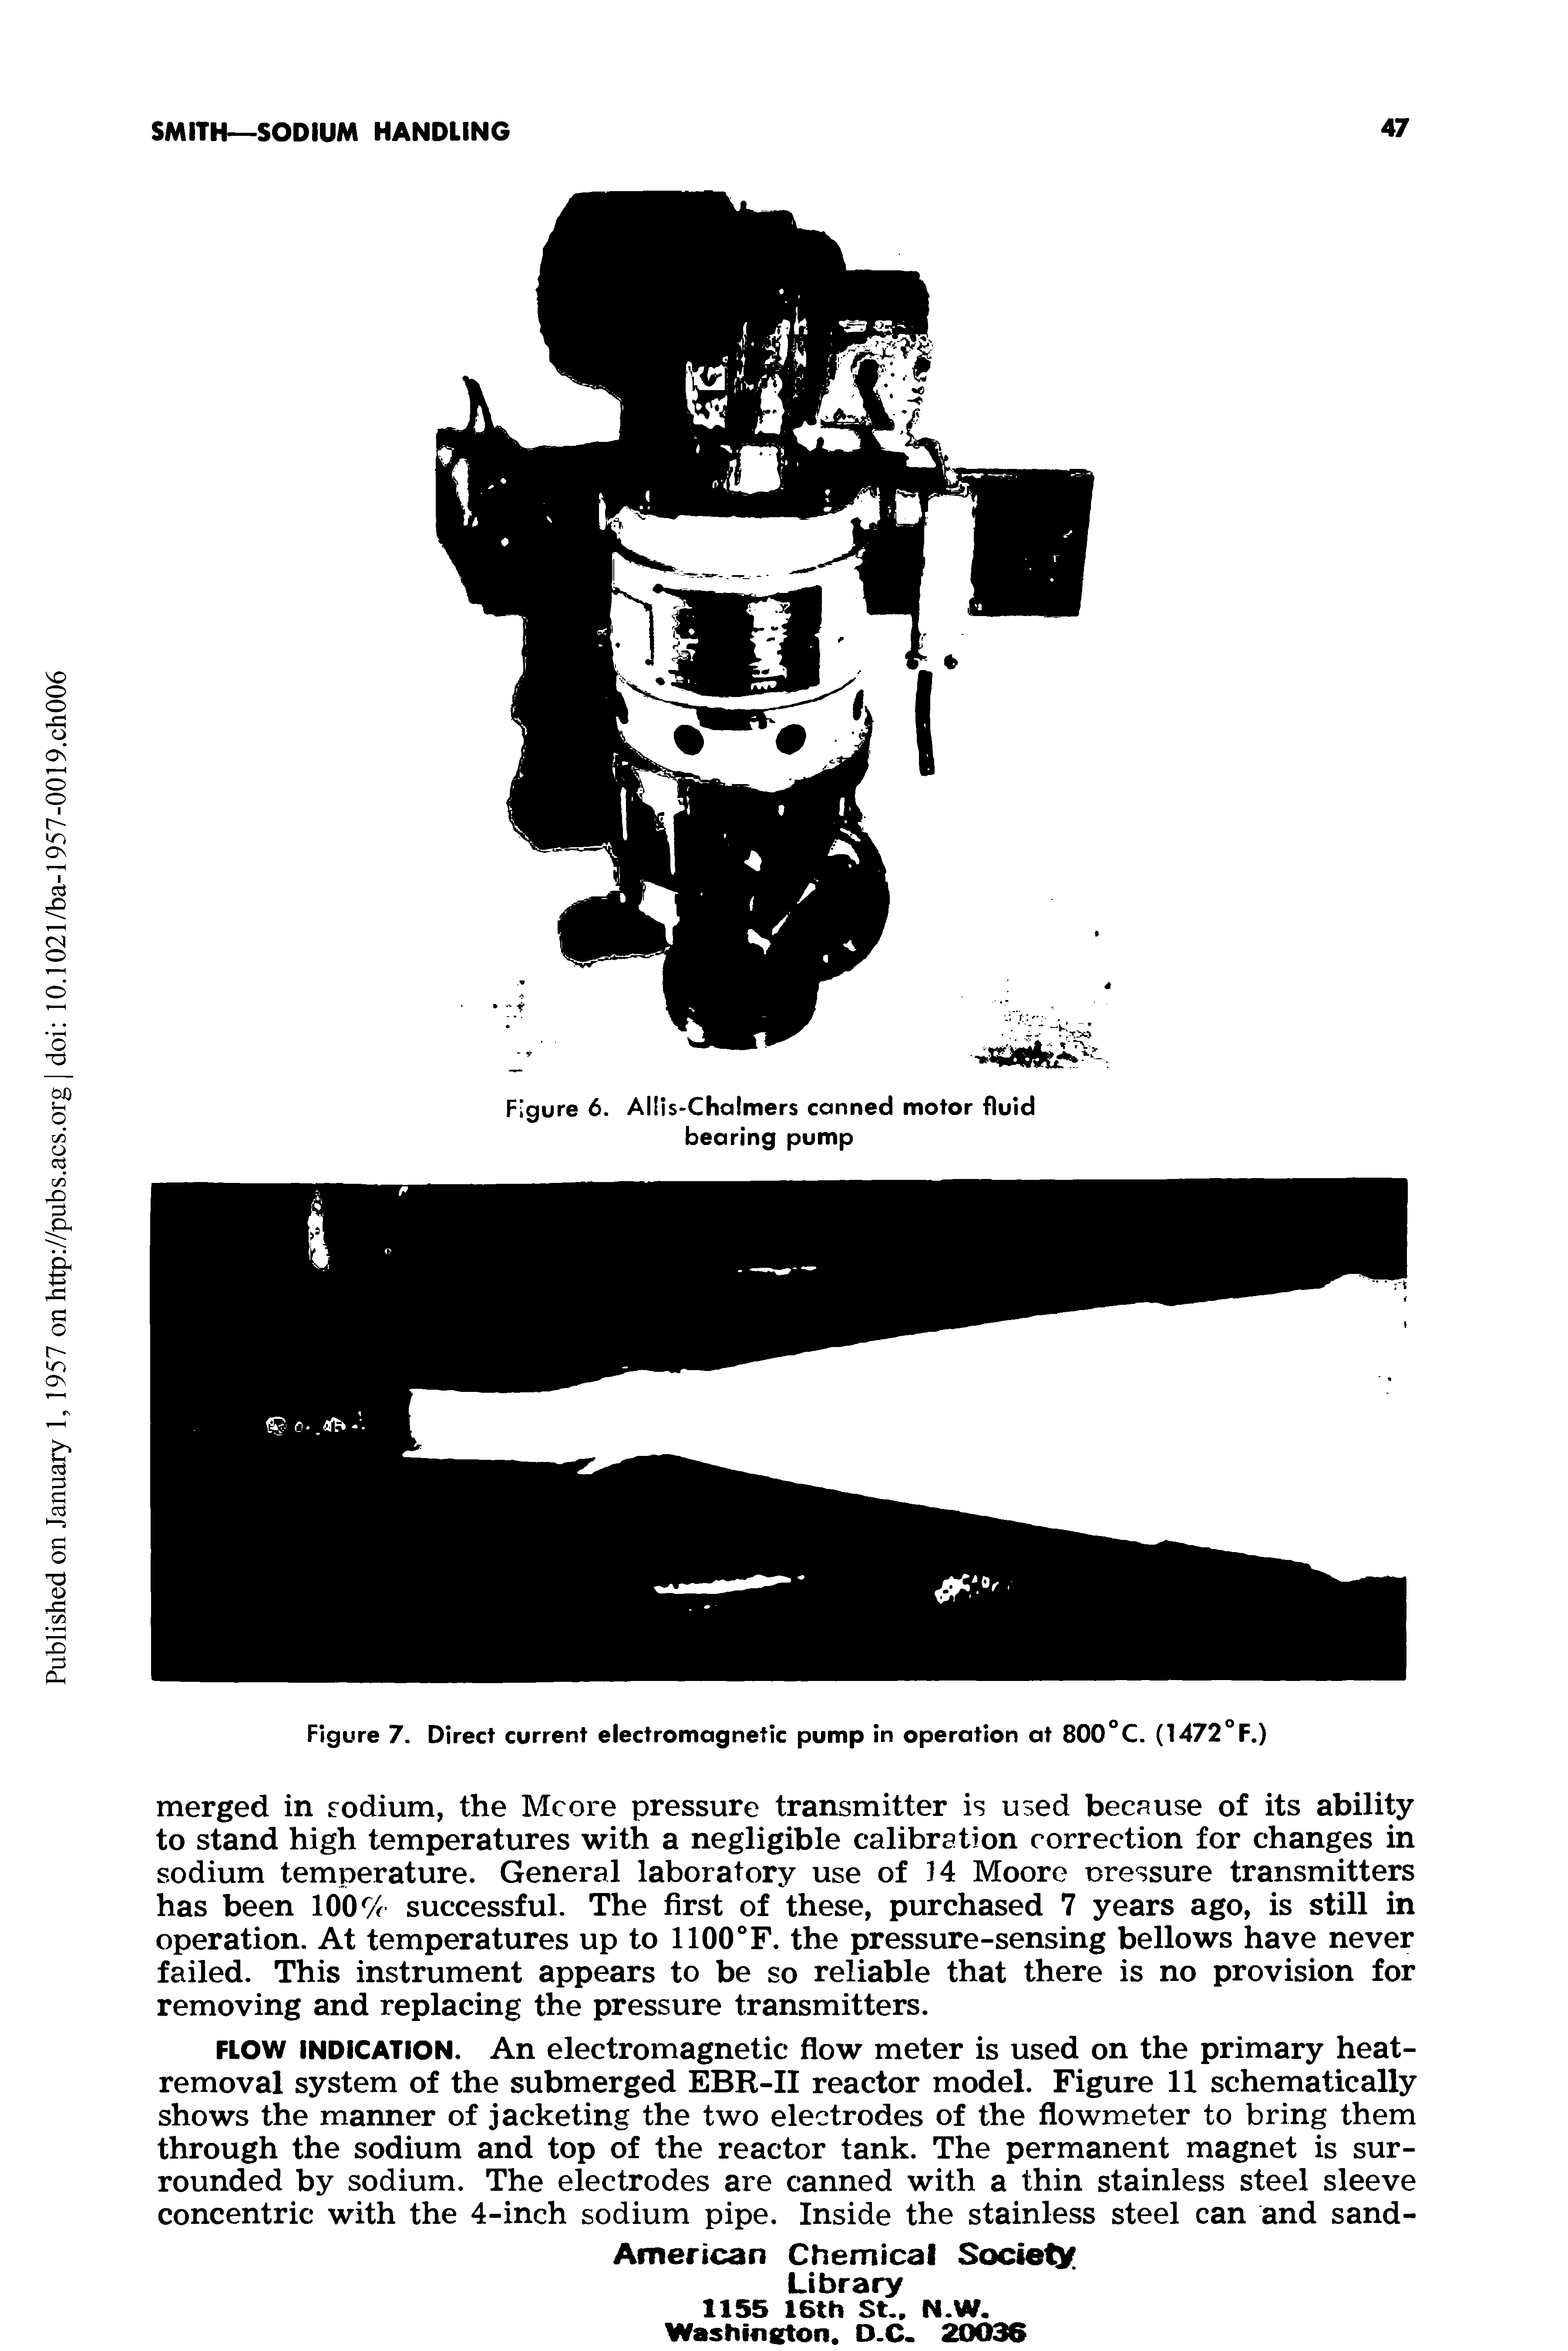 Figure 6. Aliis-Chaimers canned motor fluid bearing pump...